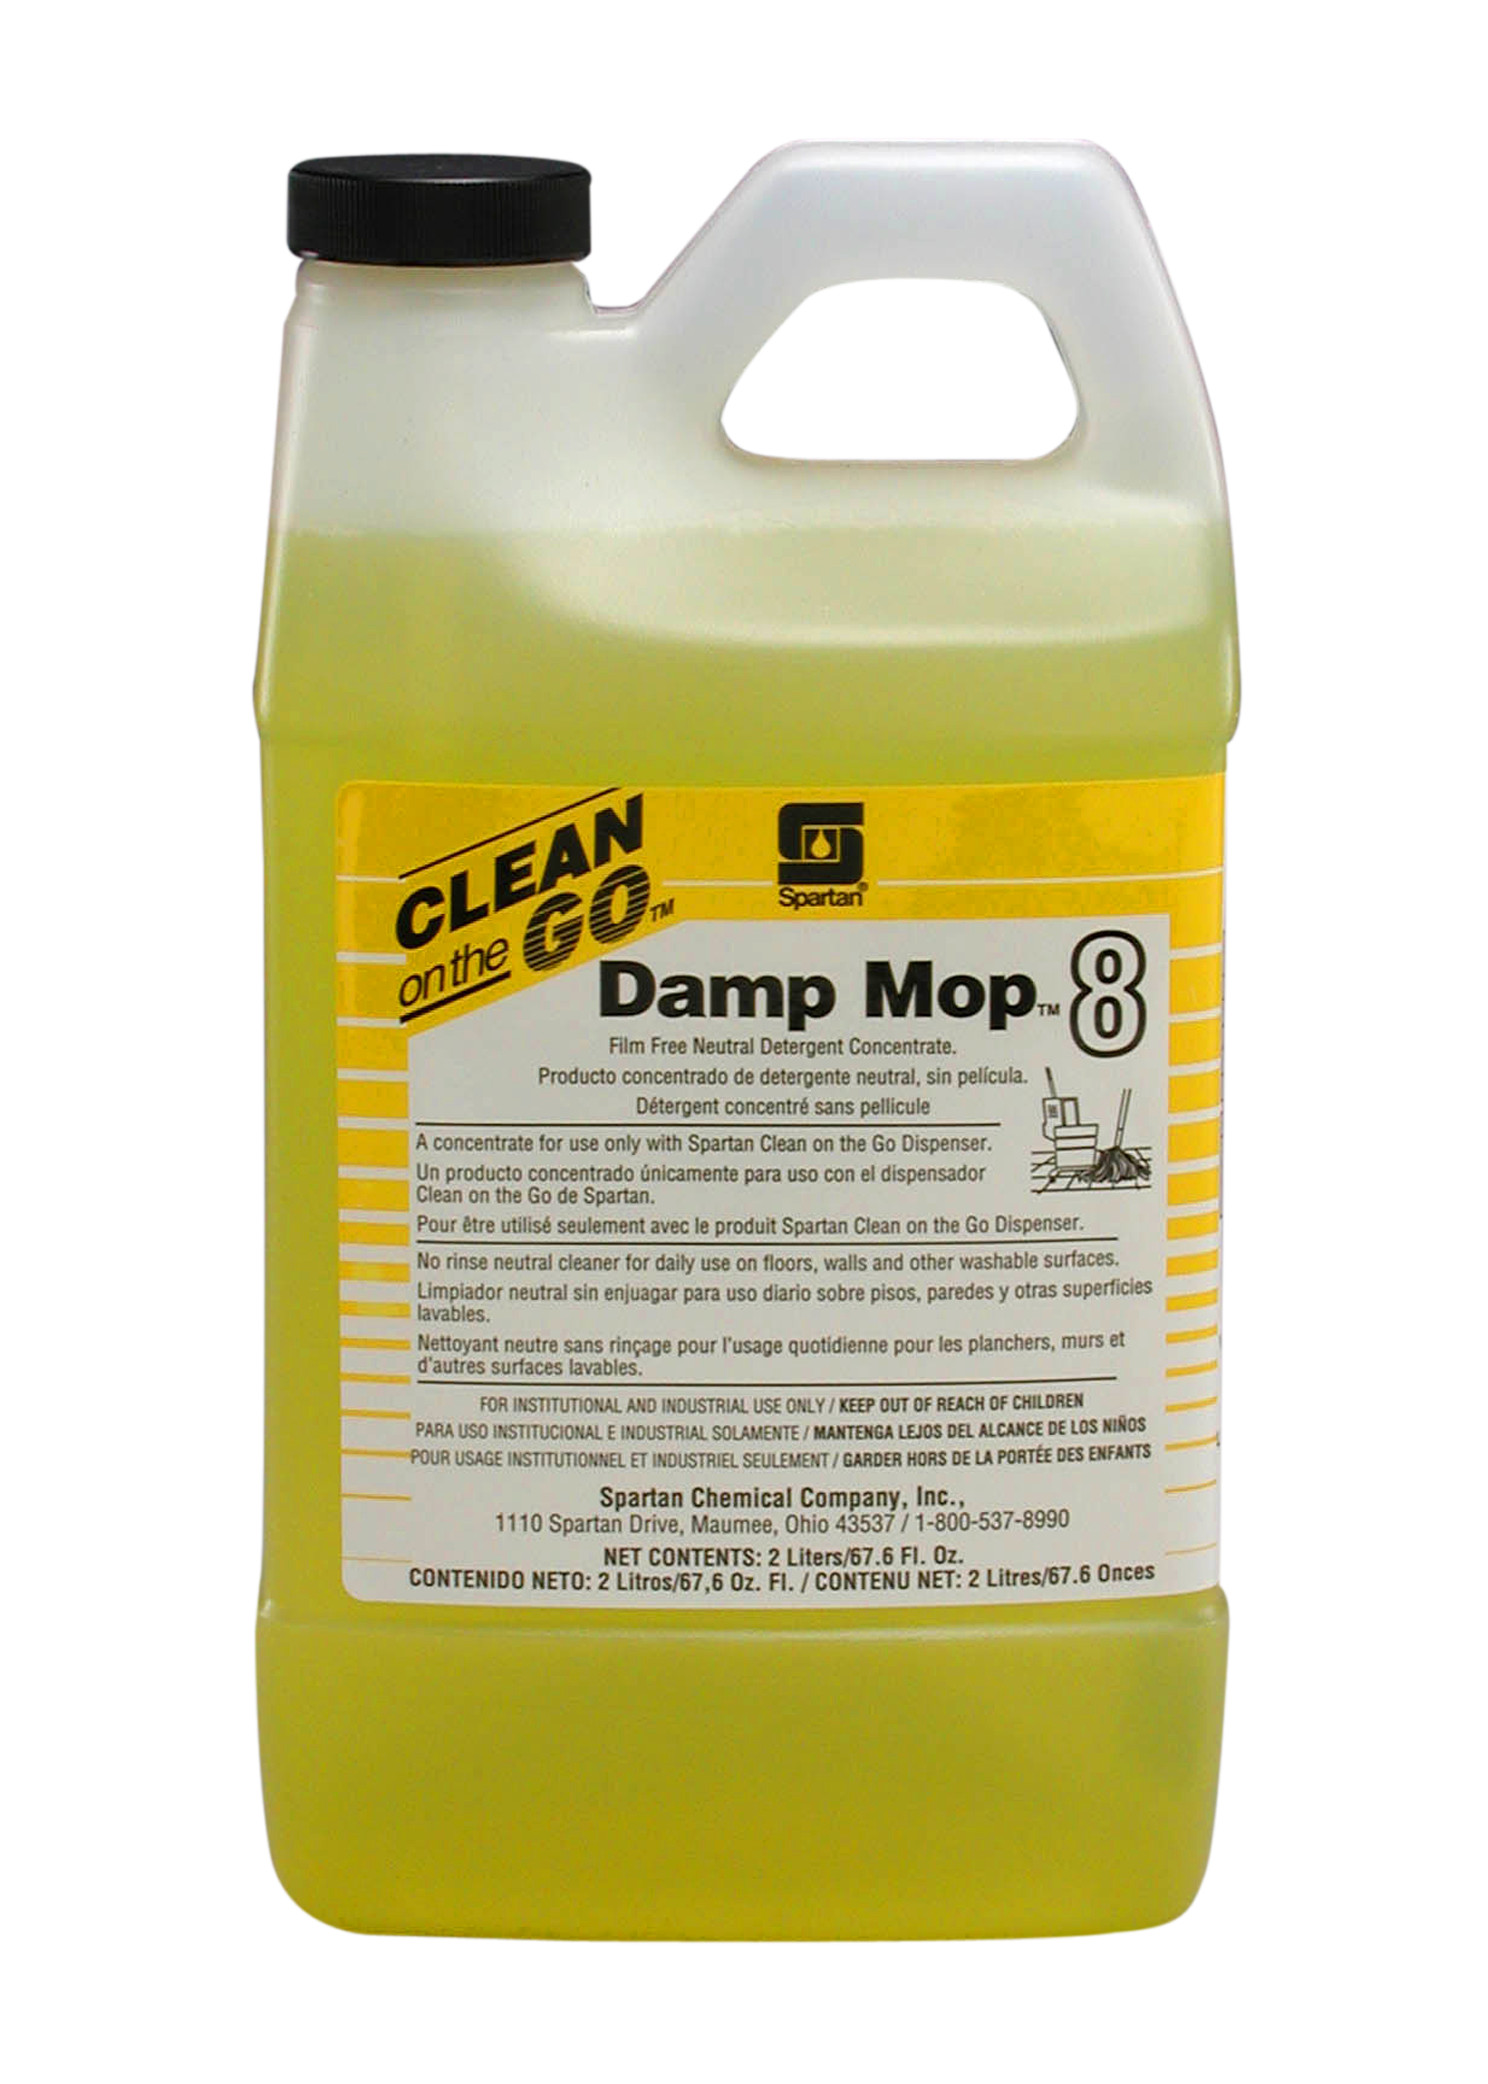 Spartan Chemical Company Damp Mop 8, 2 LITER 4/CS